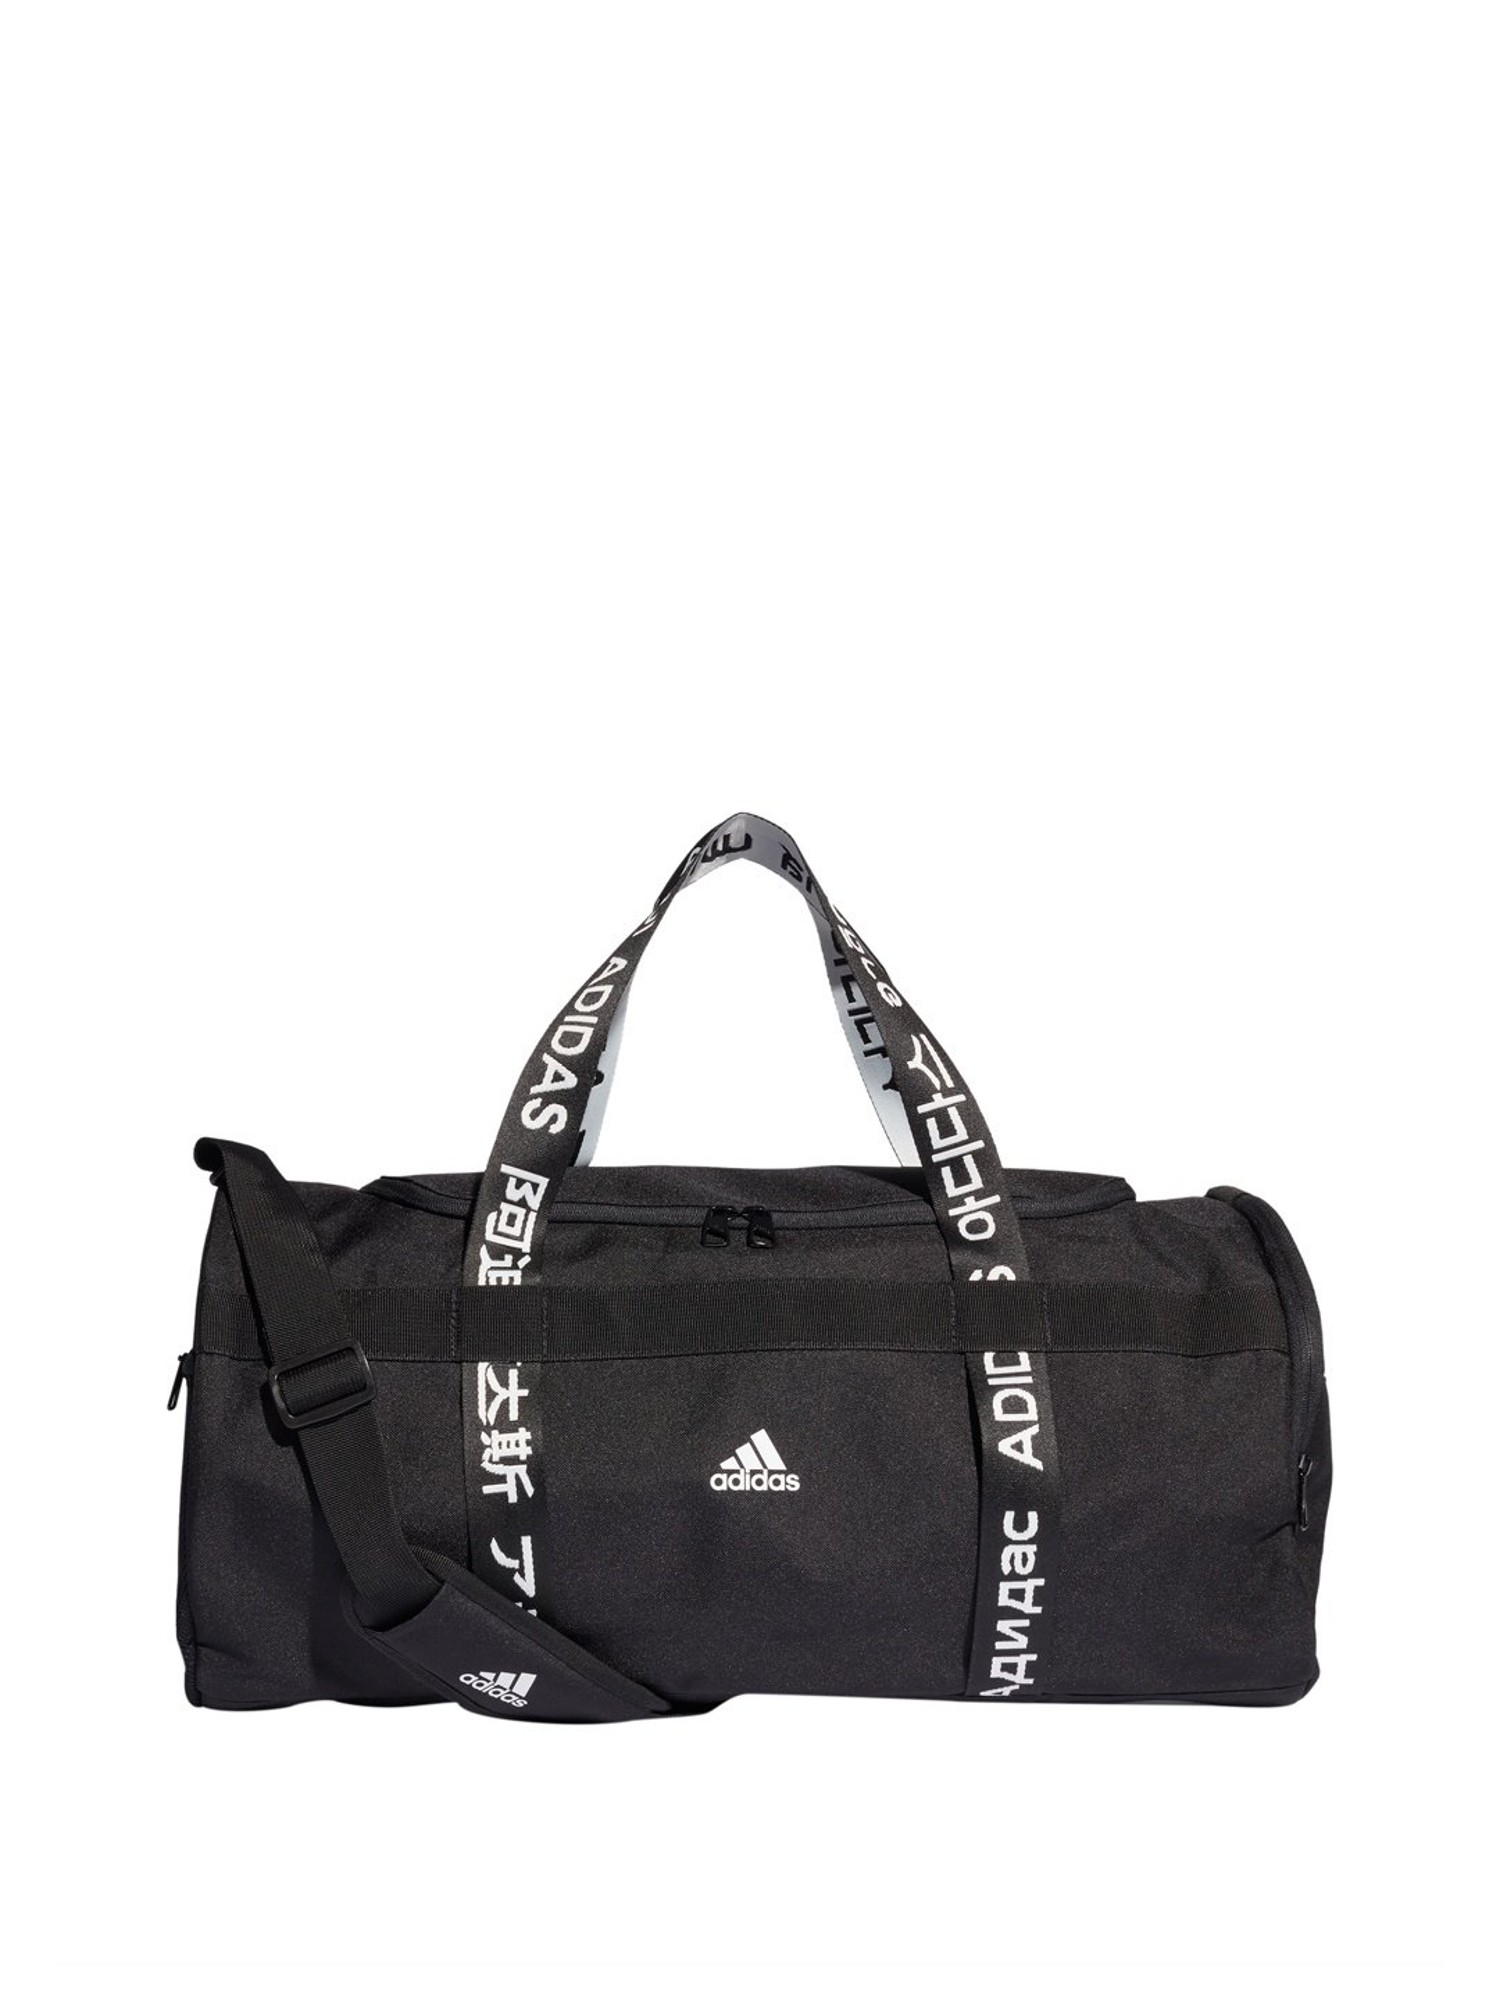 Buy Premium Duffle Bag from Lole - Sport - Women's Apparel - Lolë